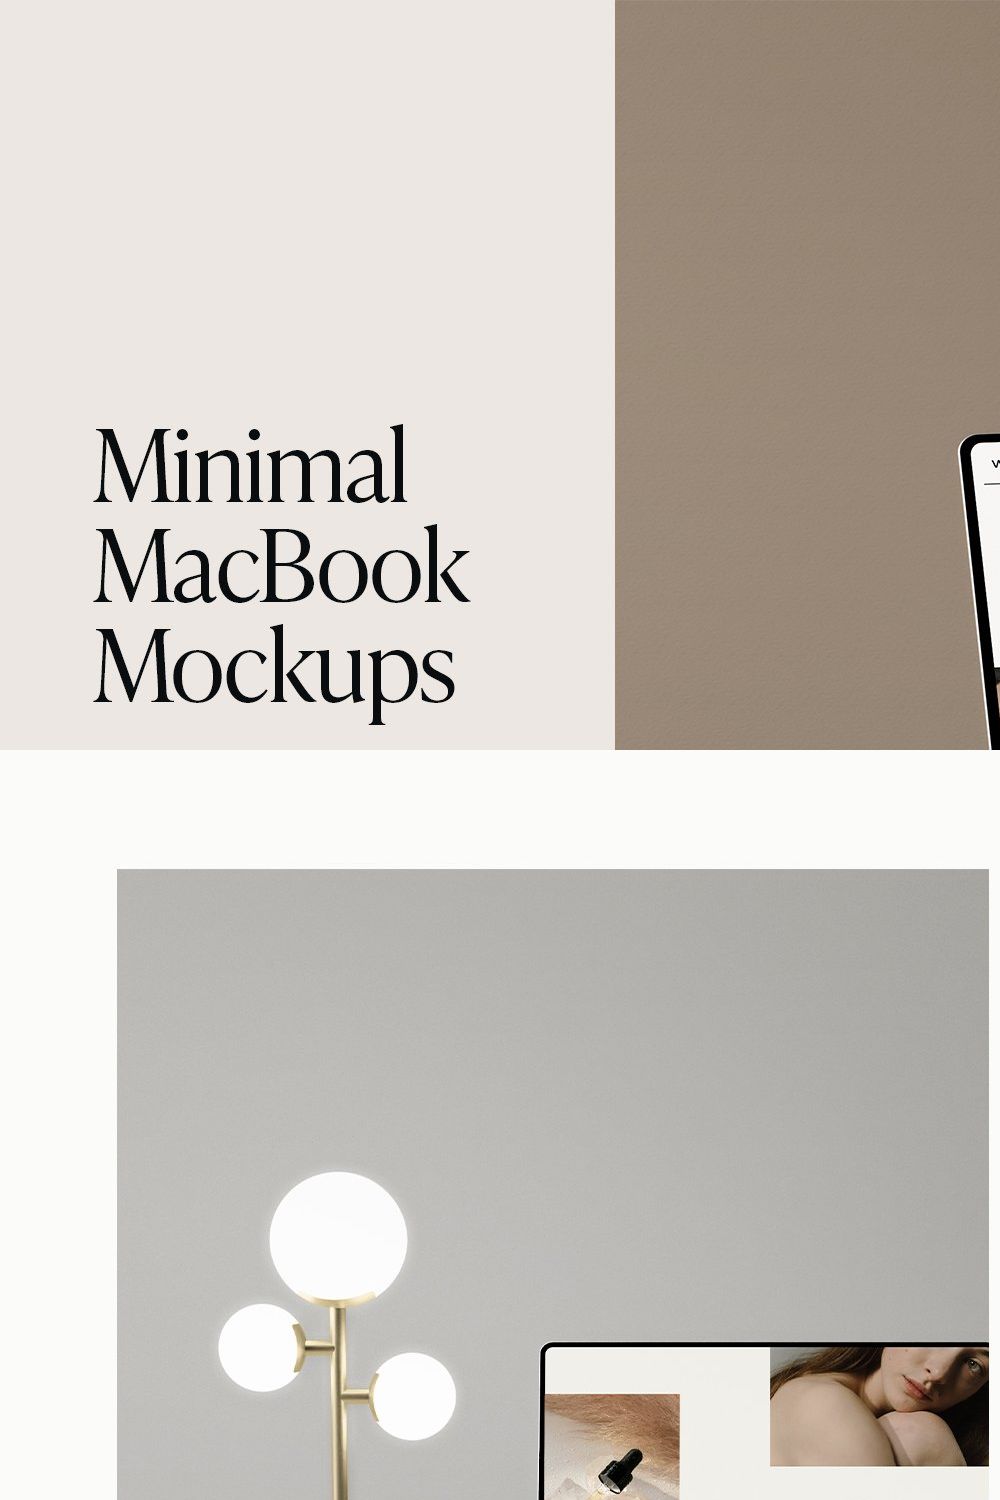 MacBook Mockup Bundle pinterest preview image.